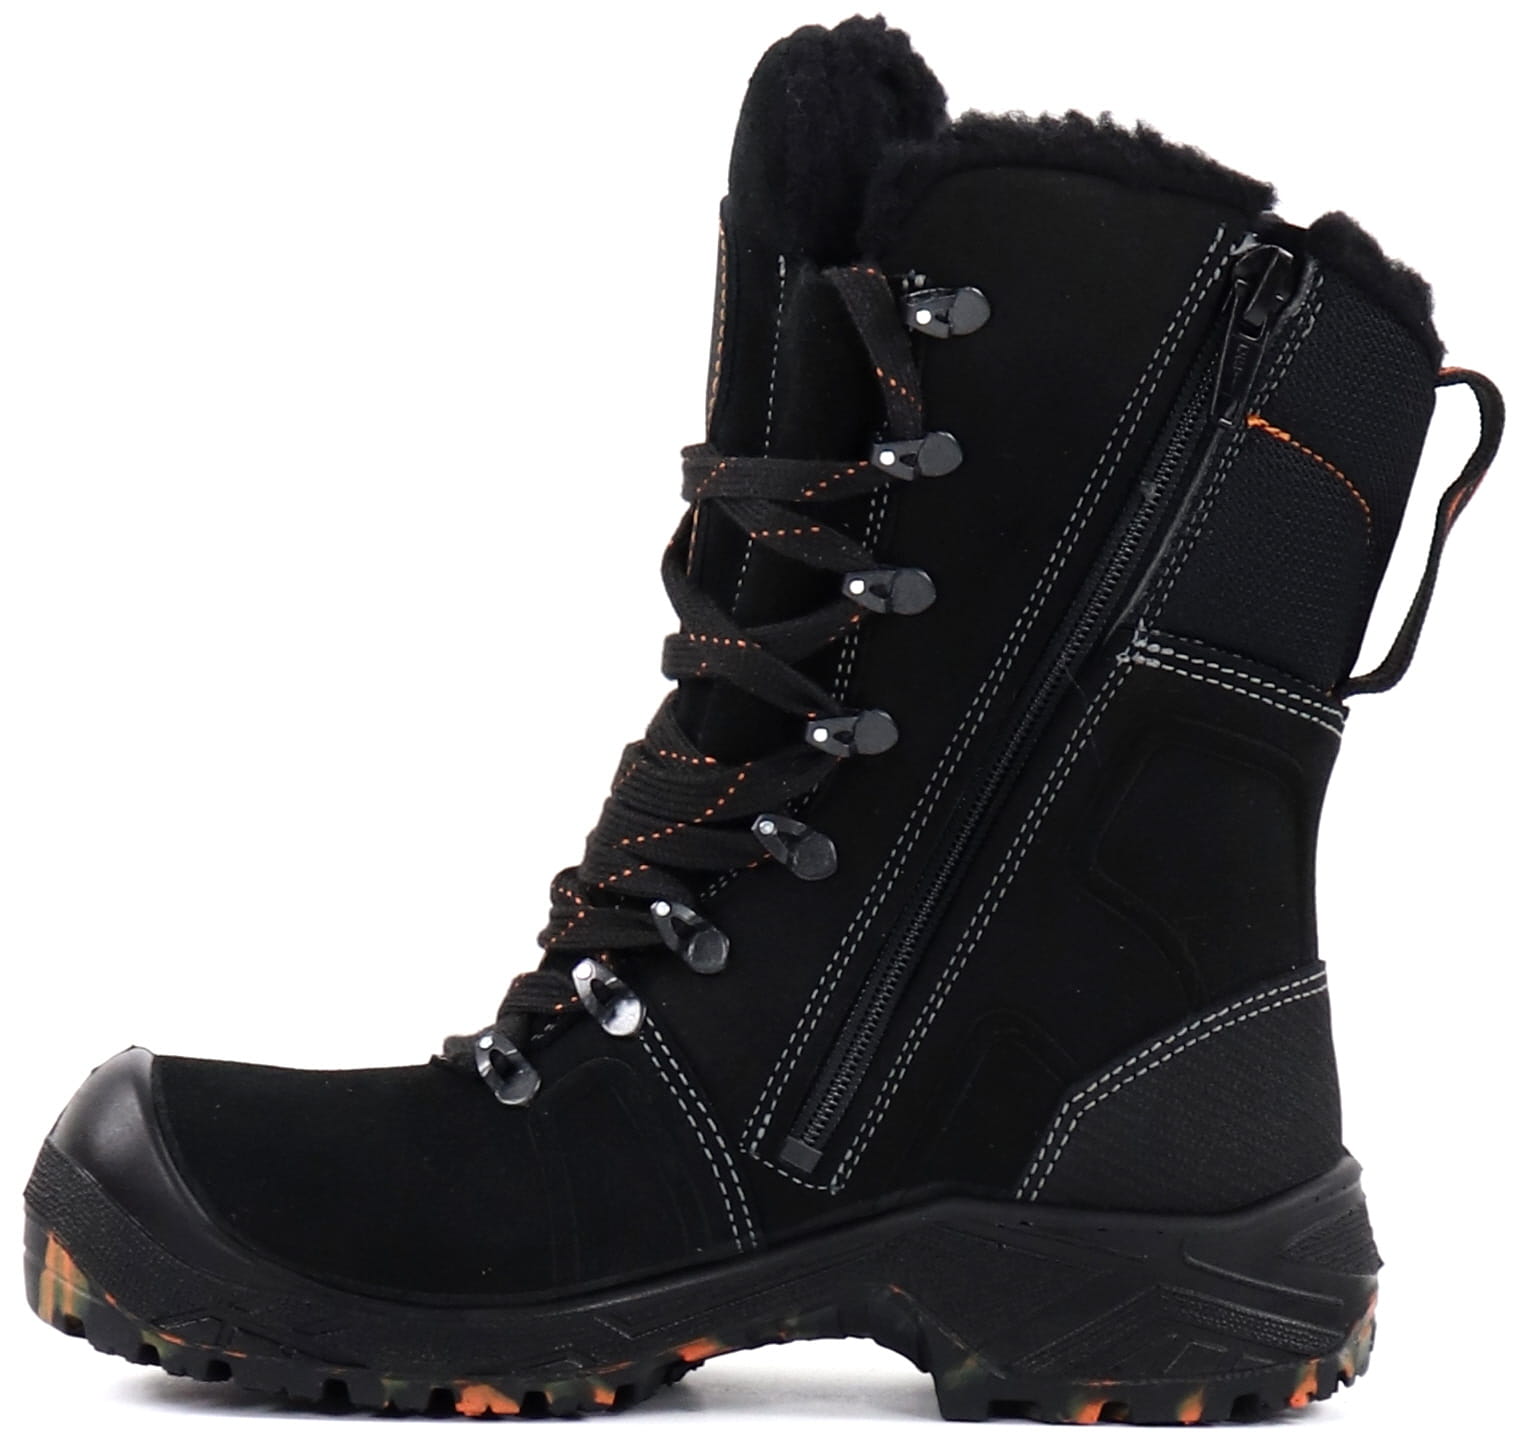 Sievi Winter Combat Boots Alaska black - Stilettoshop.eu webstore